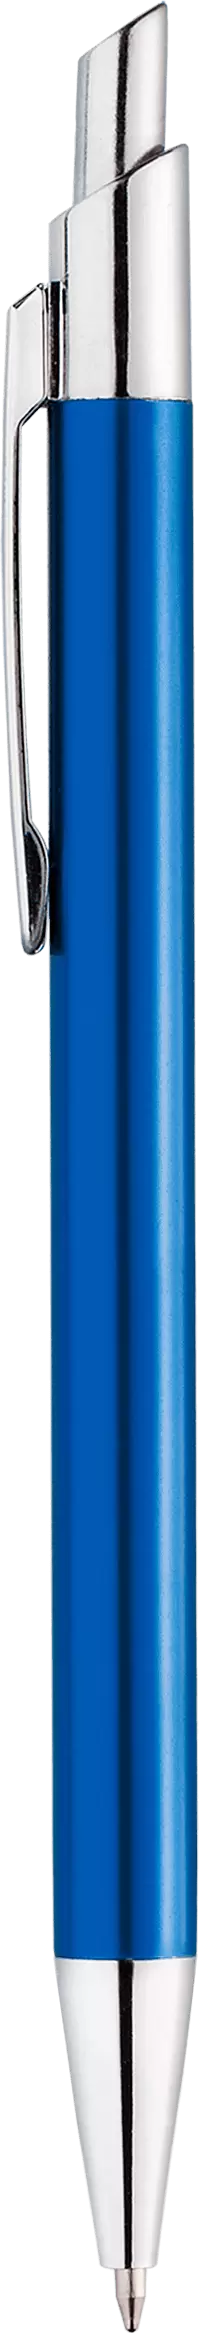 Ручка TIKKO NEW Синяя 2105-01